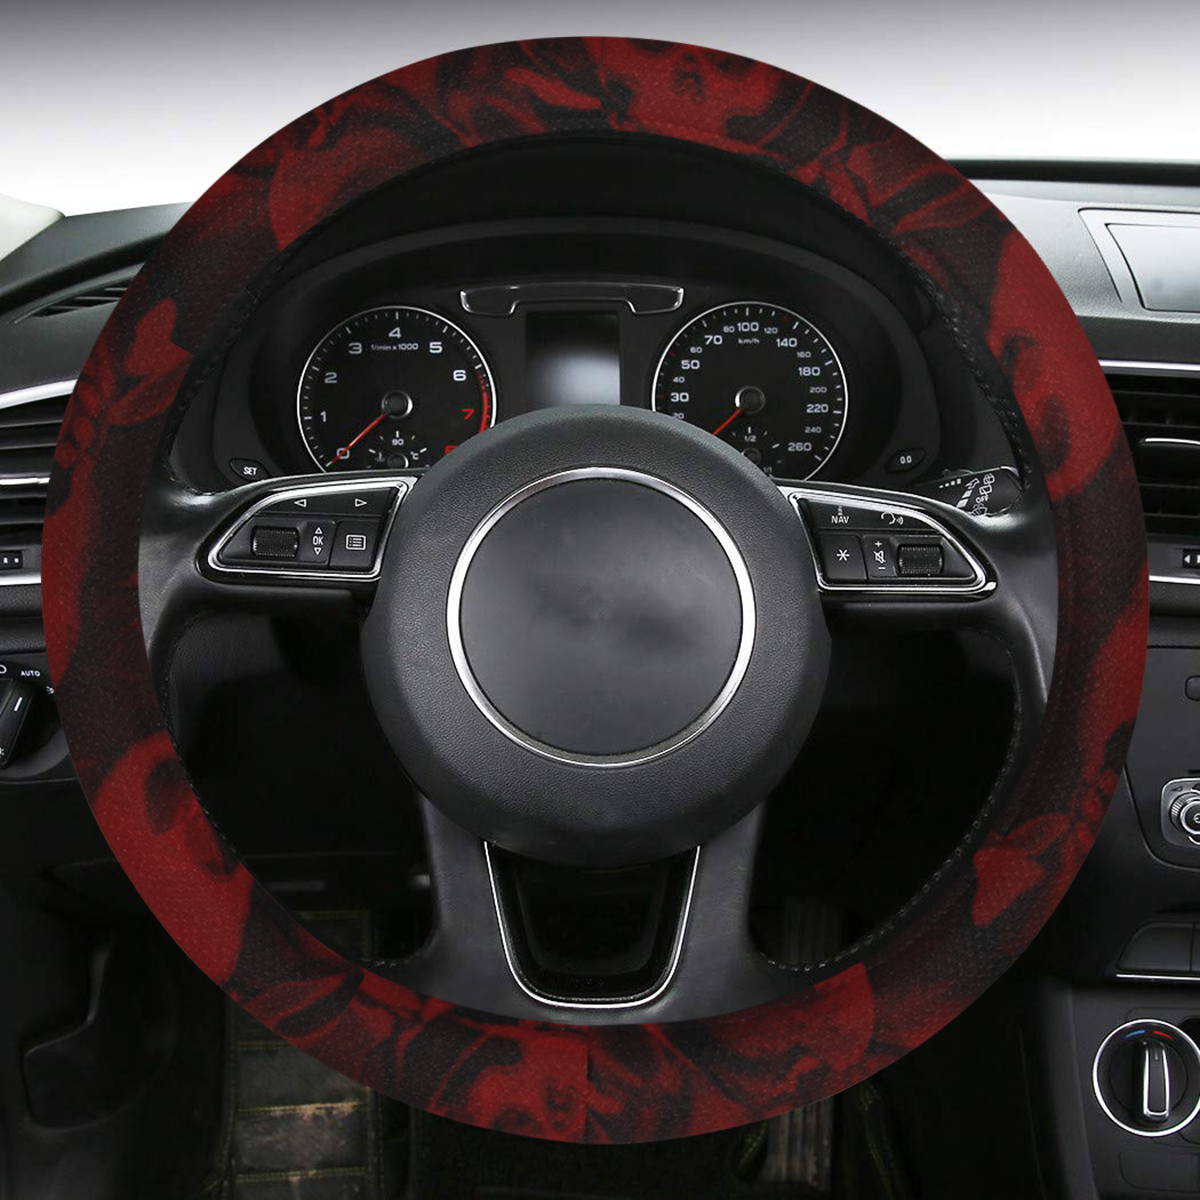 hauted skulls red Steering Wheel Cover with Anti-Slip Insert